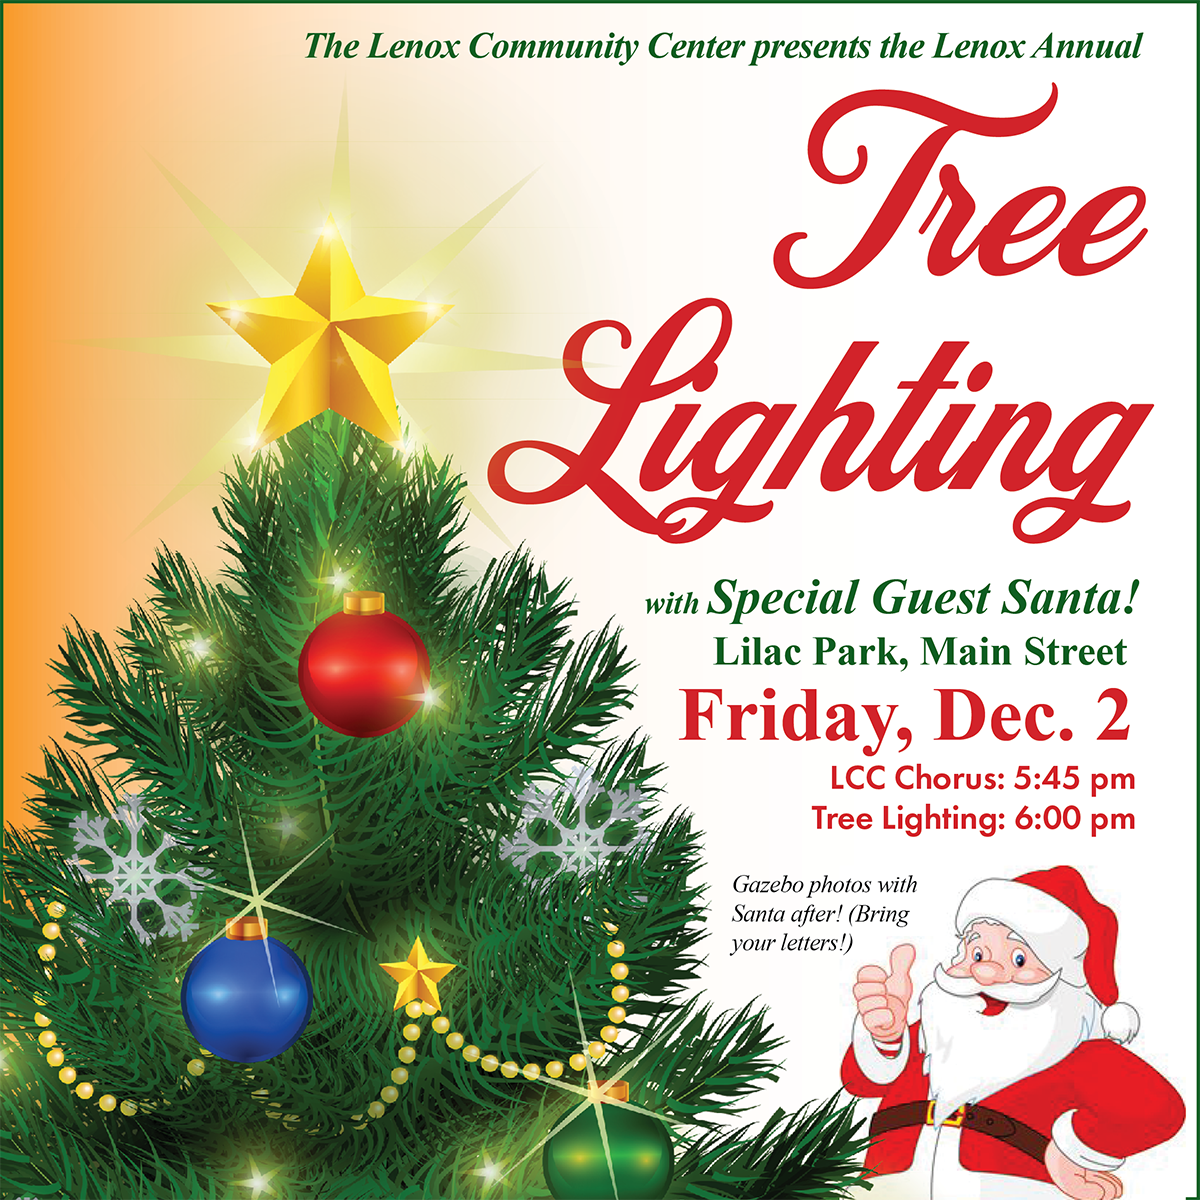 LILAC PARK TREE LIGHTING SQ Lenox MA Chamber of Commerce